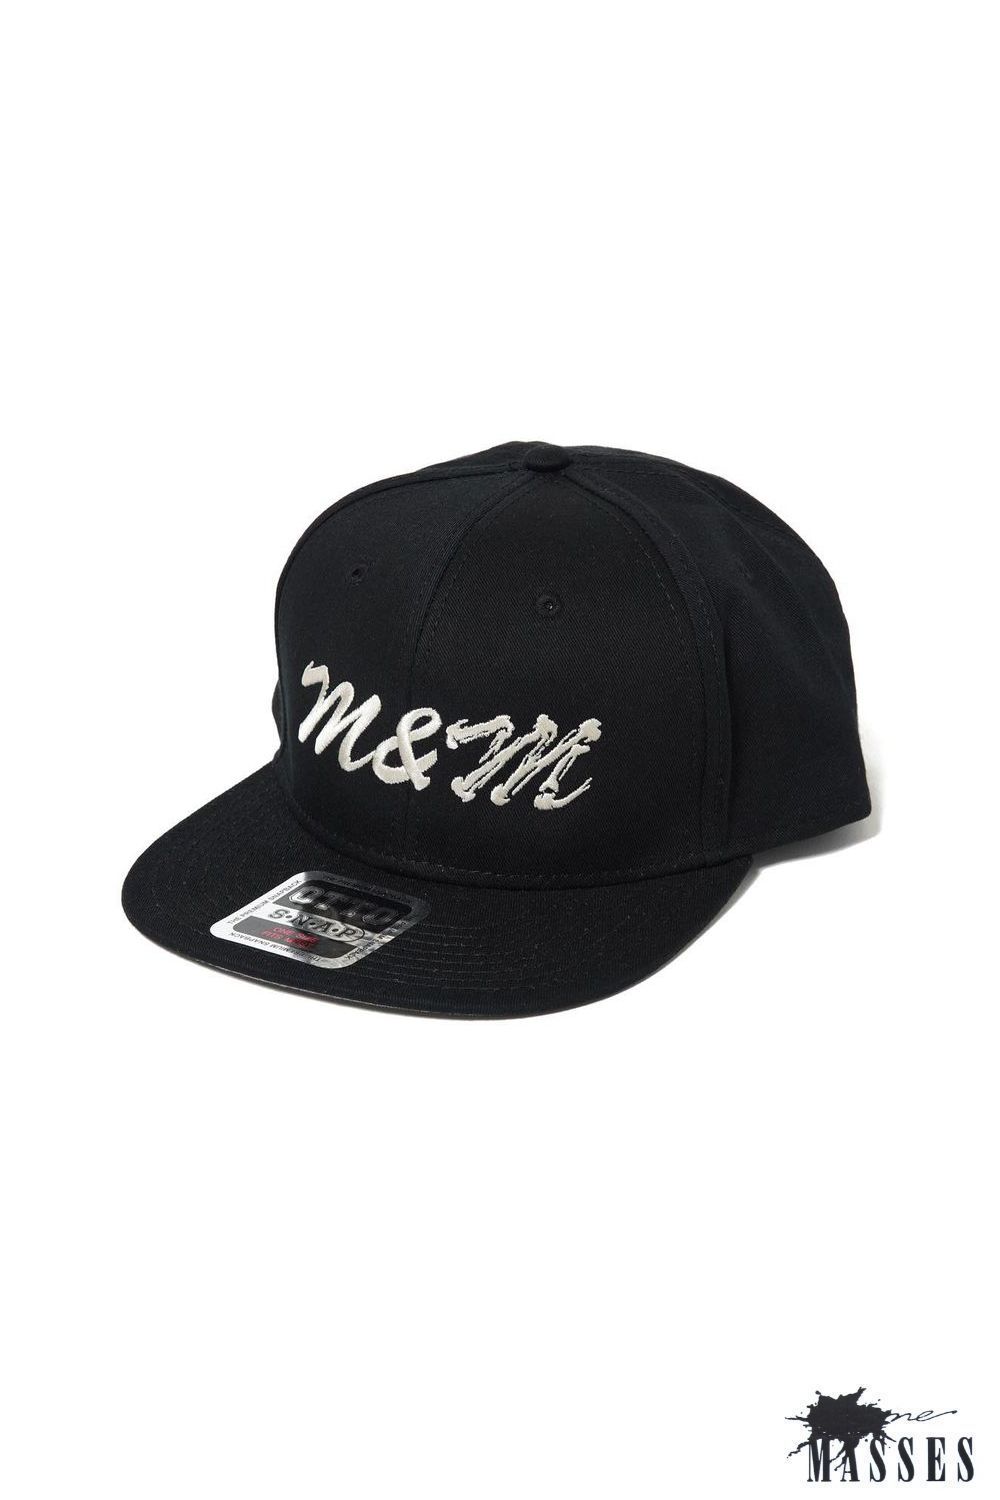 M&M CUSTOM PERFORMANCE - SNAPBACK BB CAP (×MASSES) (BLACK